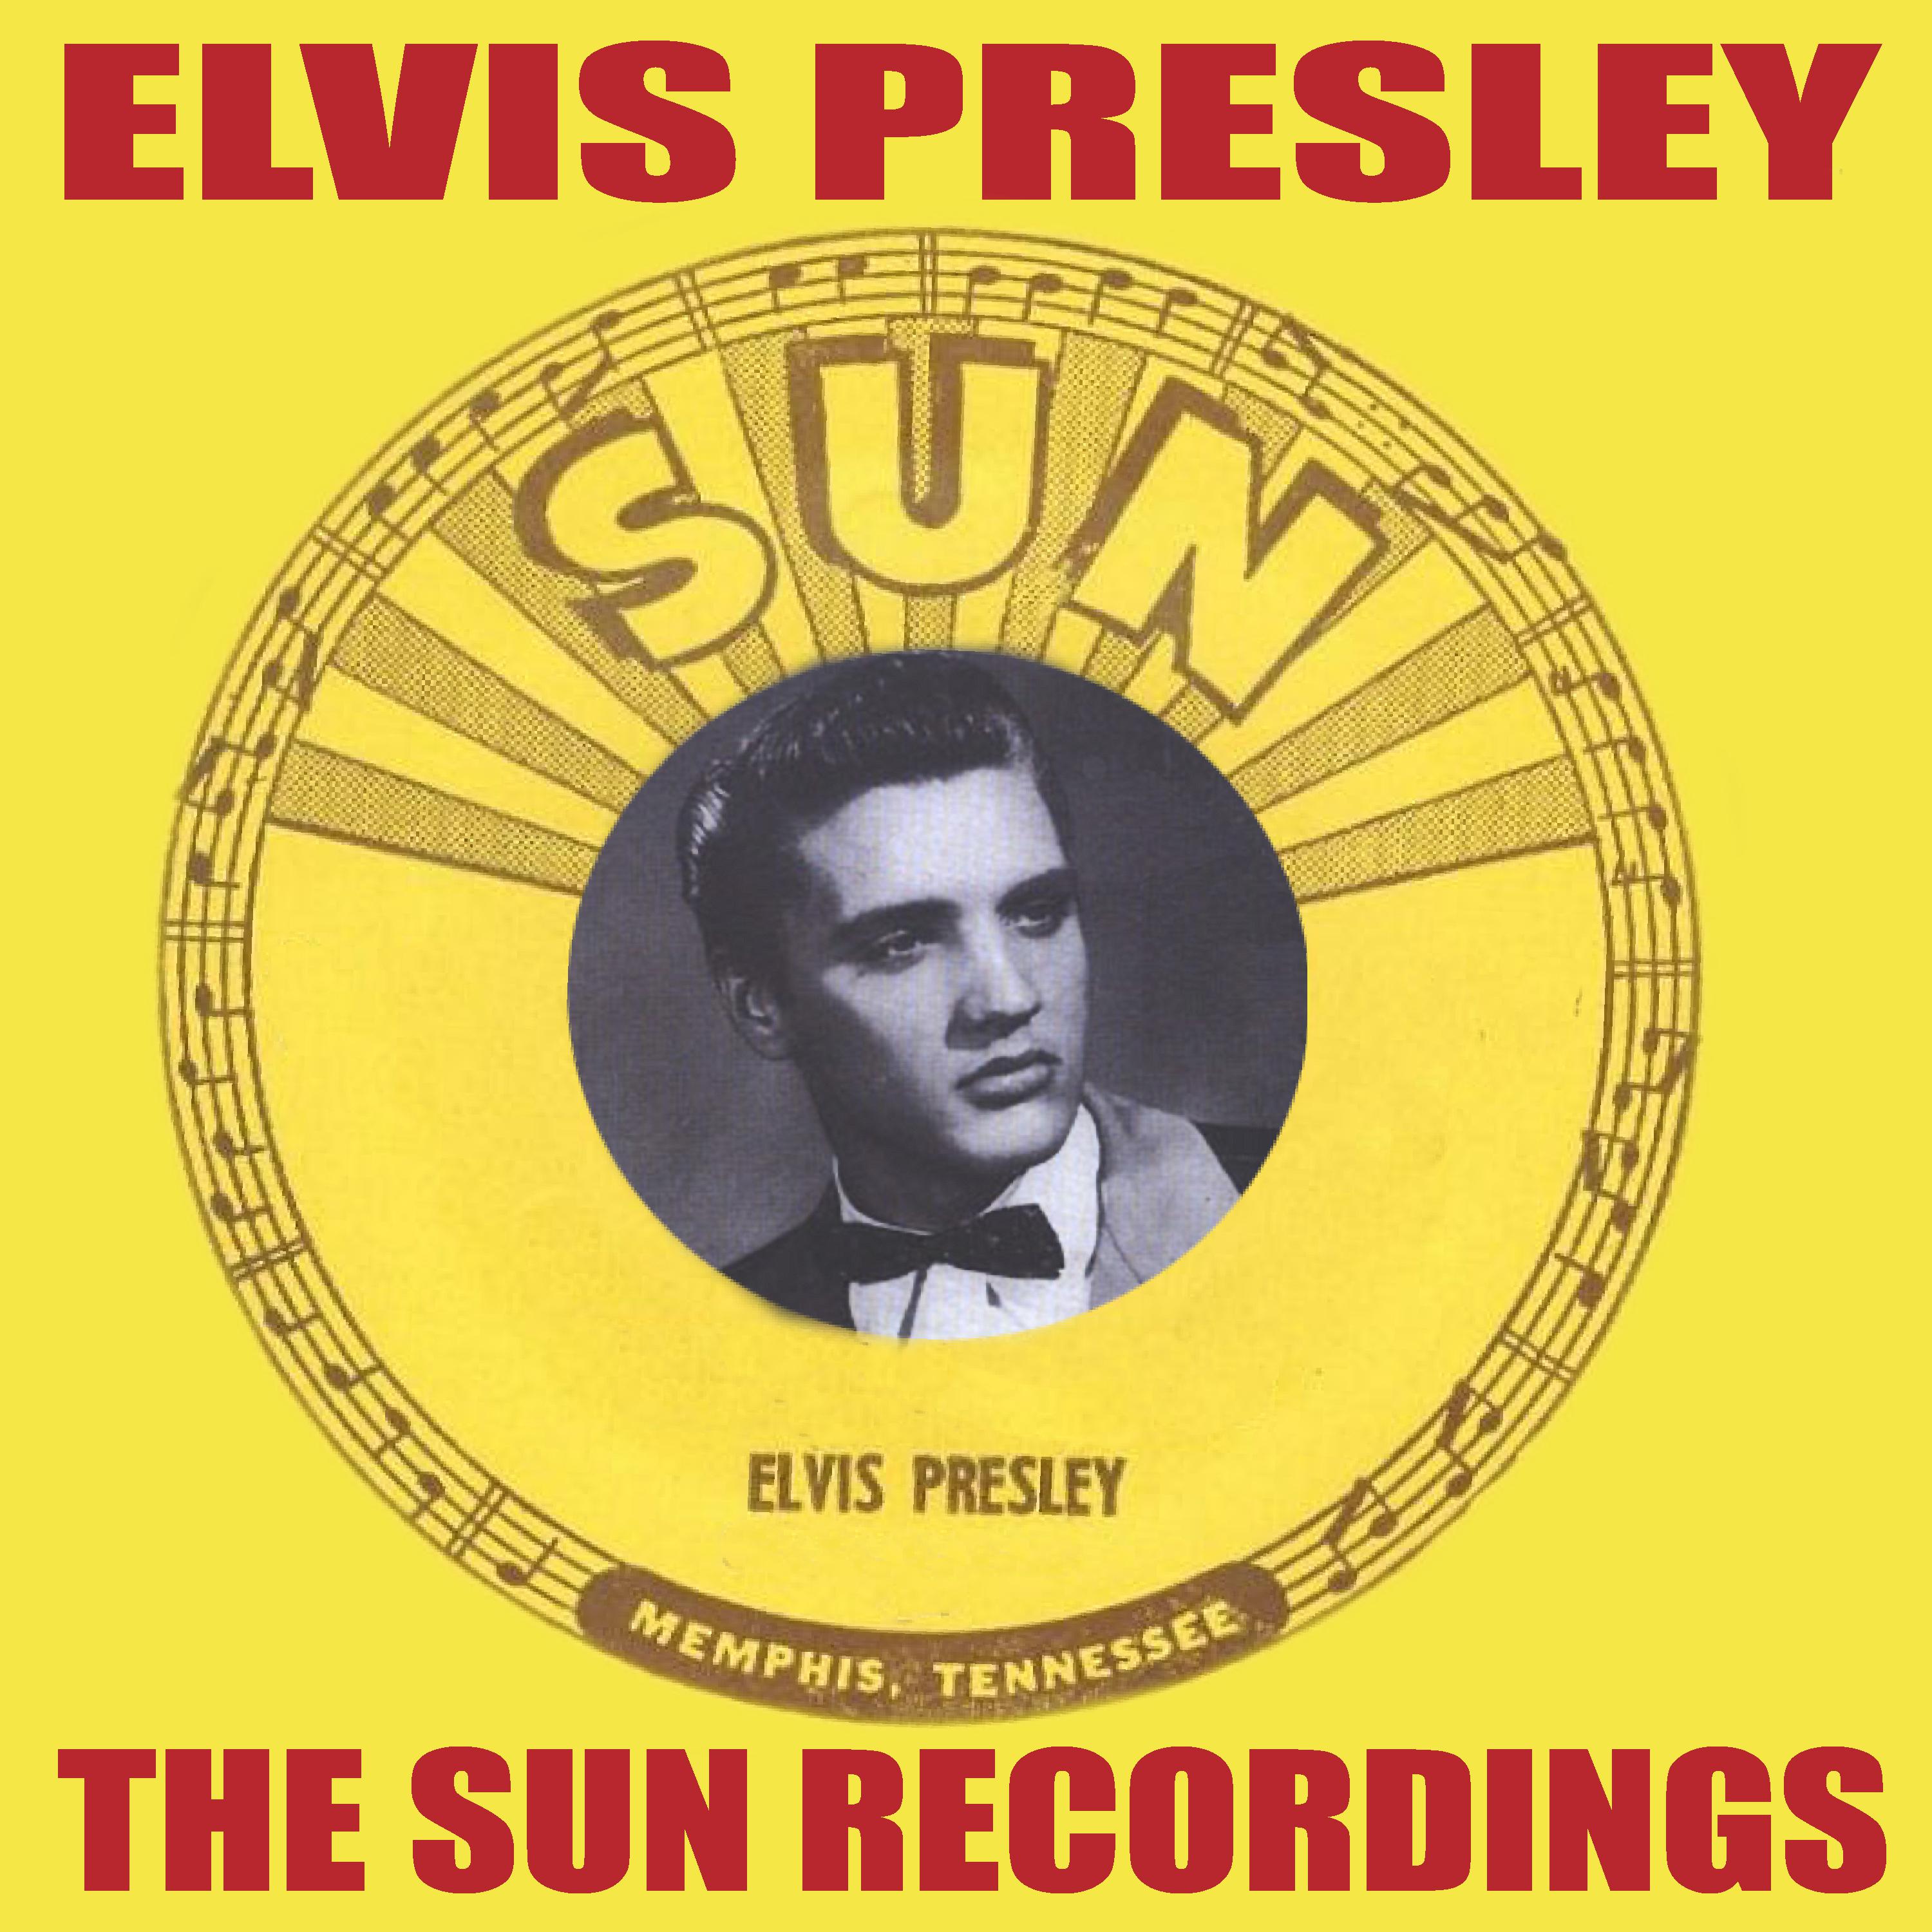 The Sun Recordings